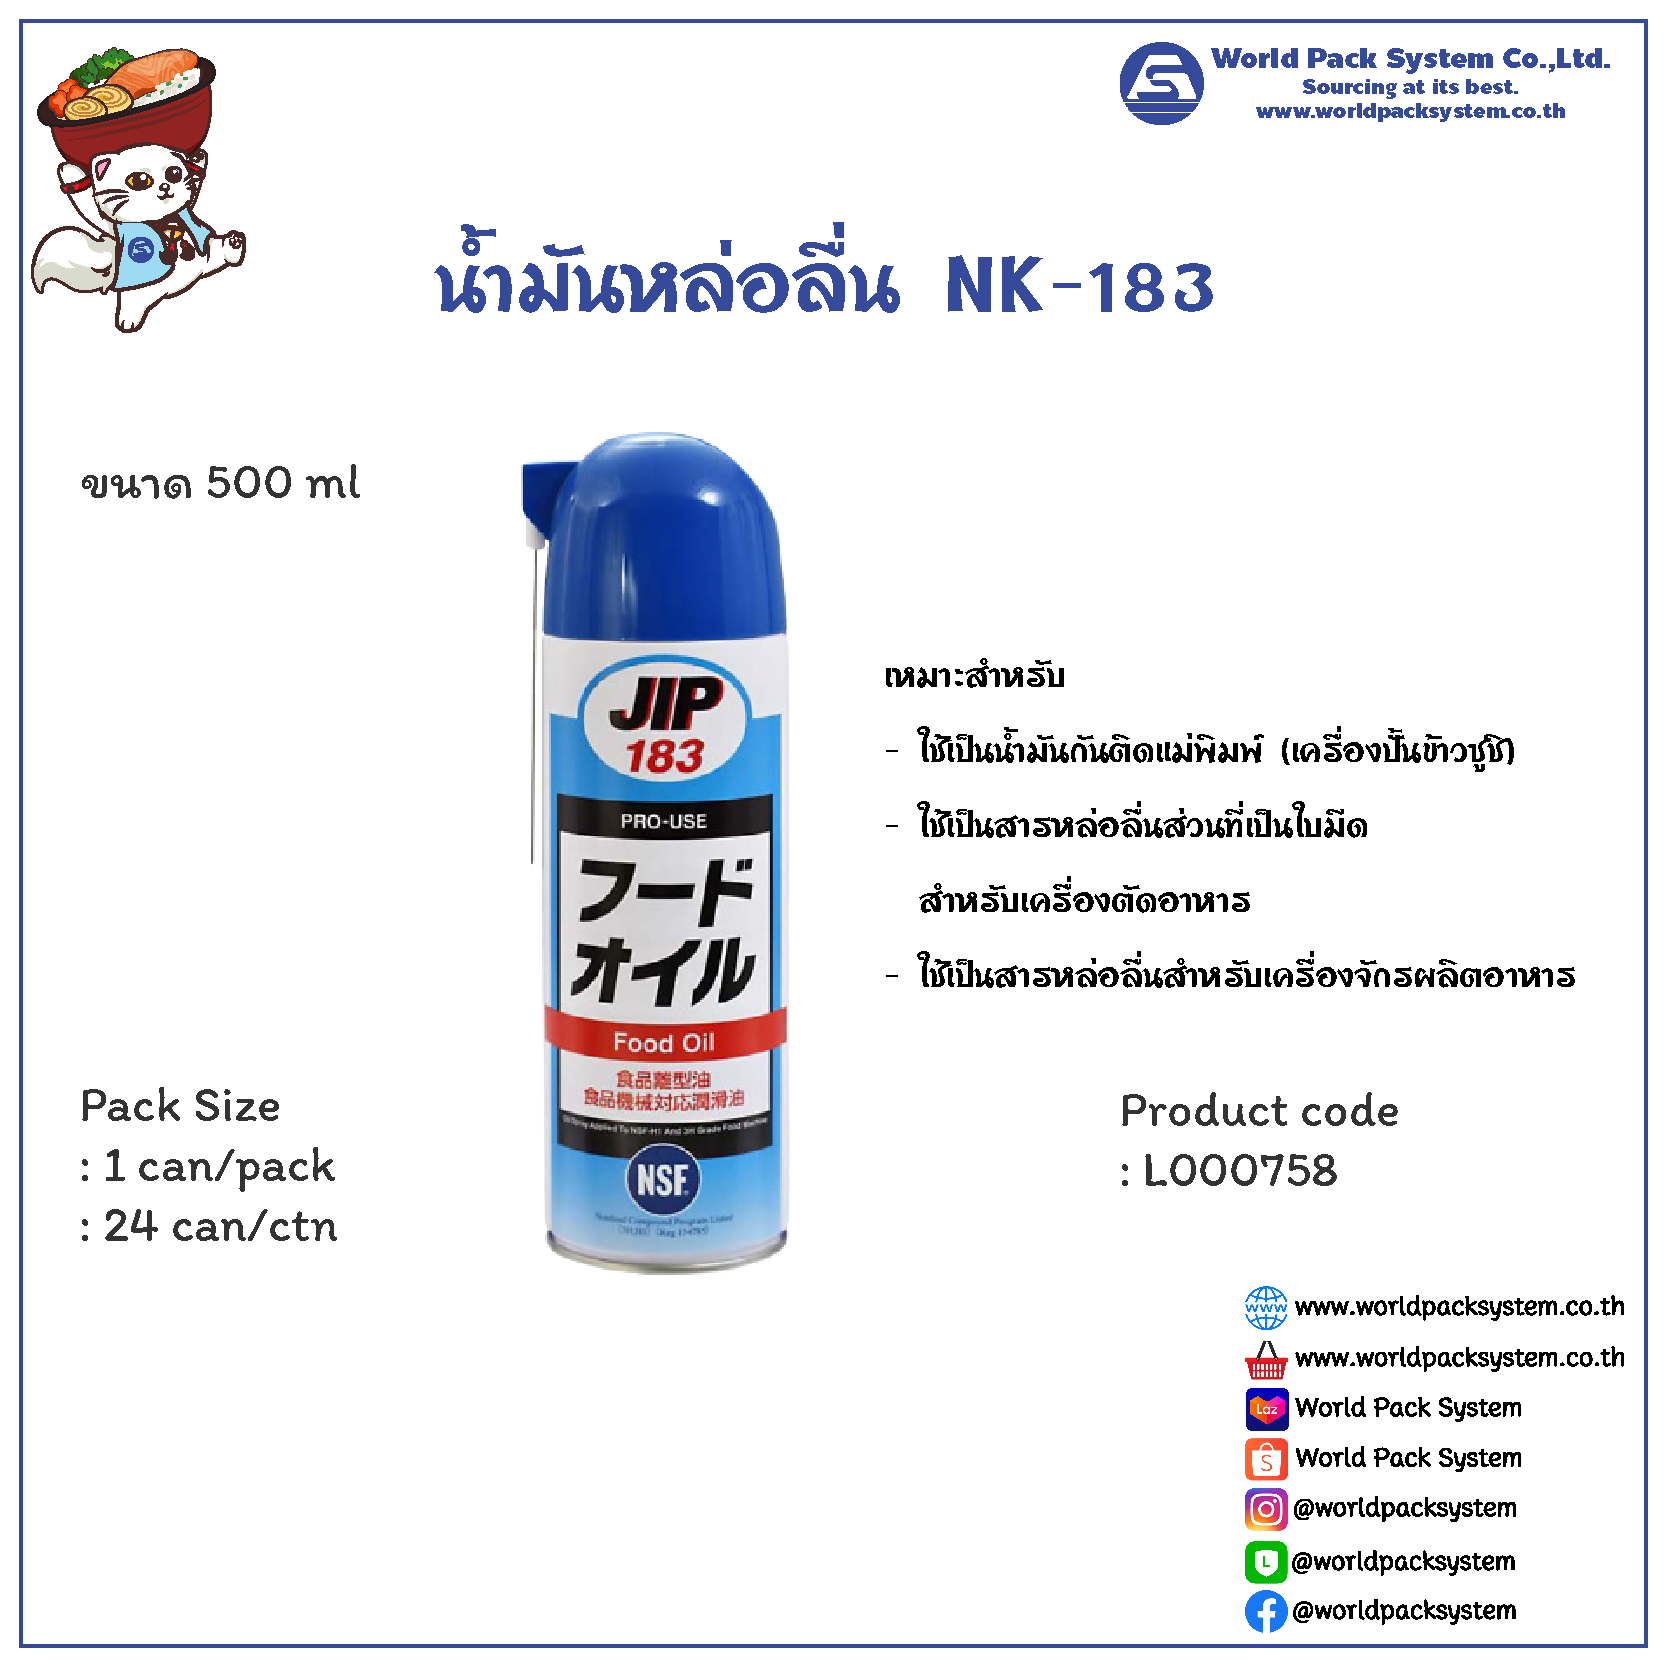 Food Oil NK-183 Size 500 ml.